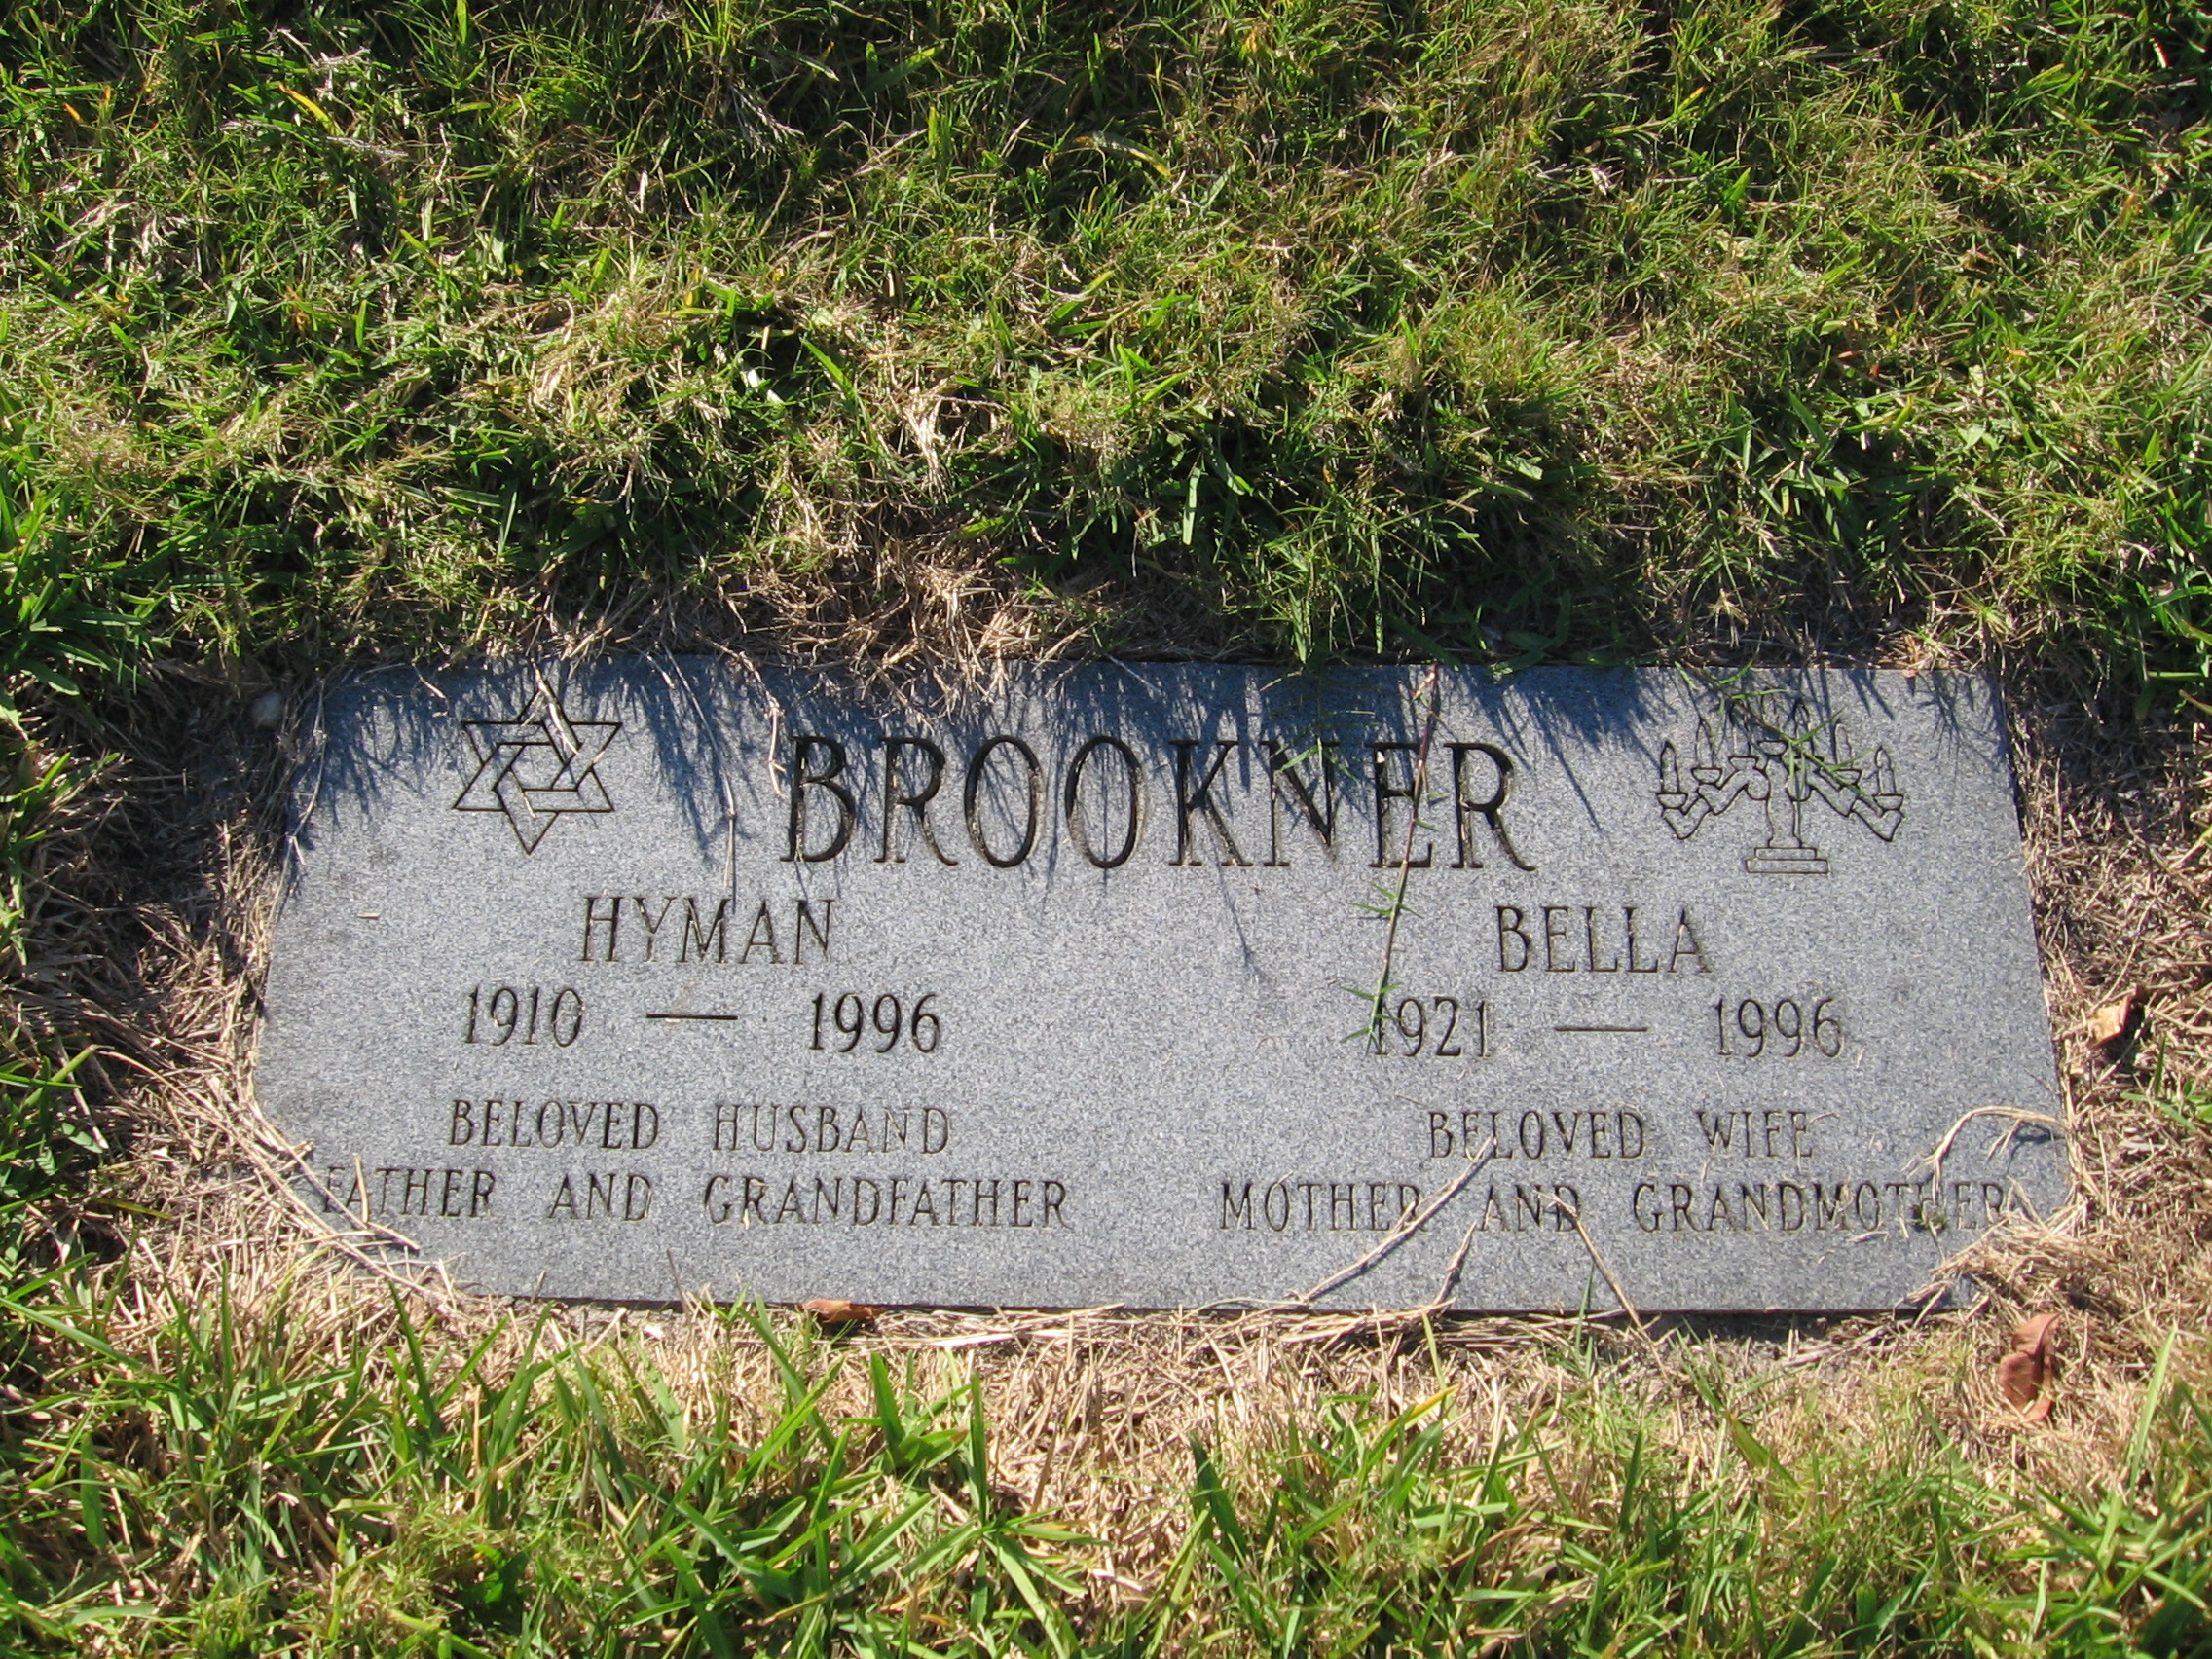 Hyman Brookner